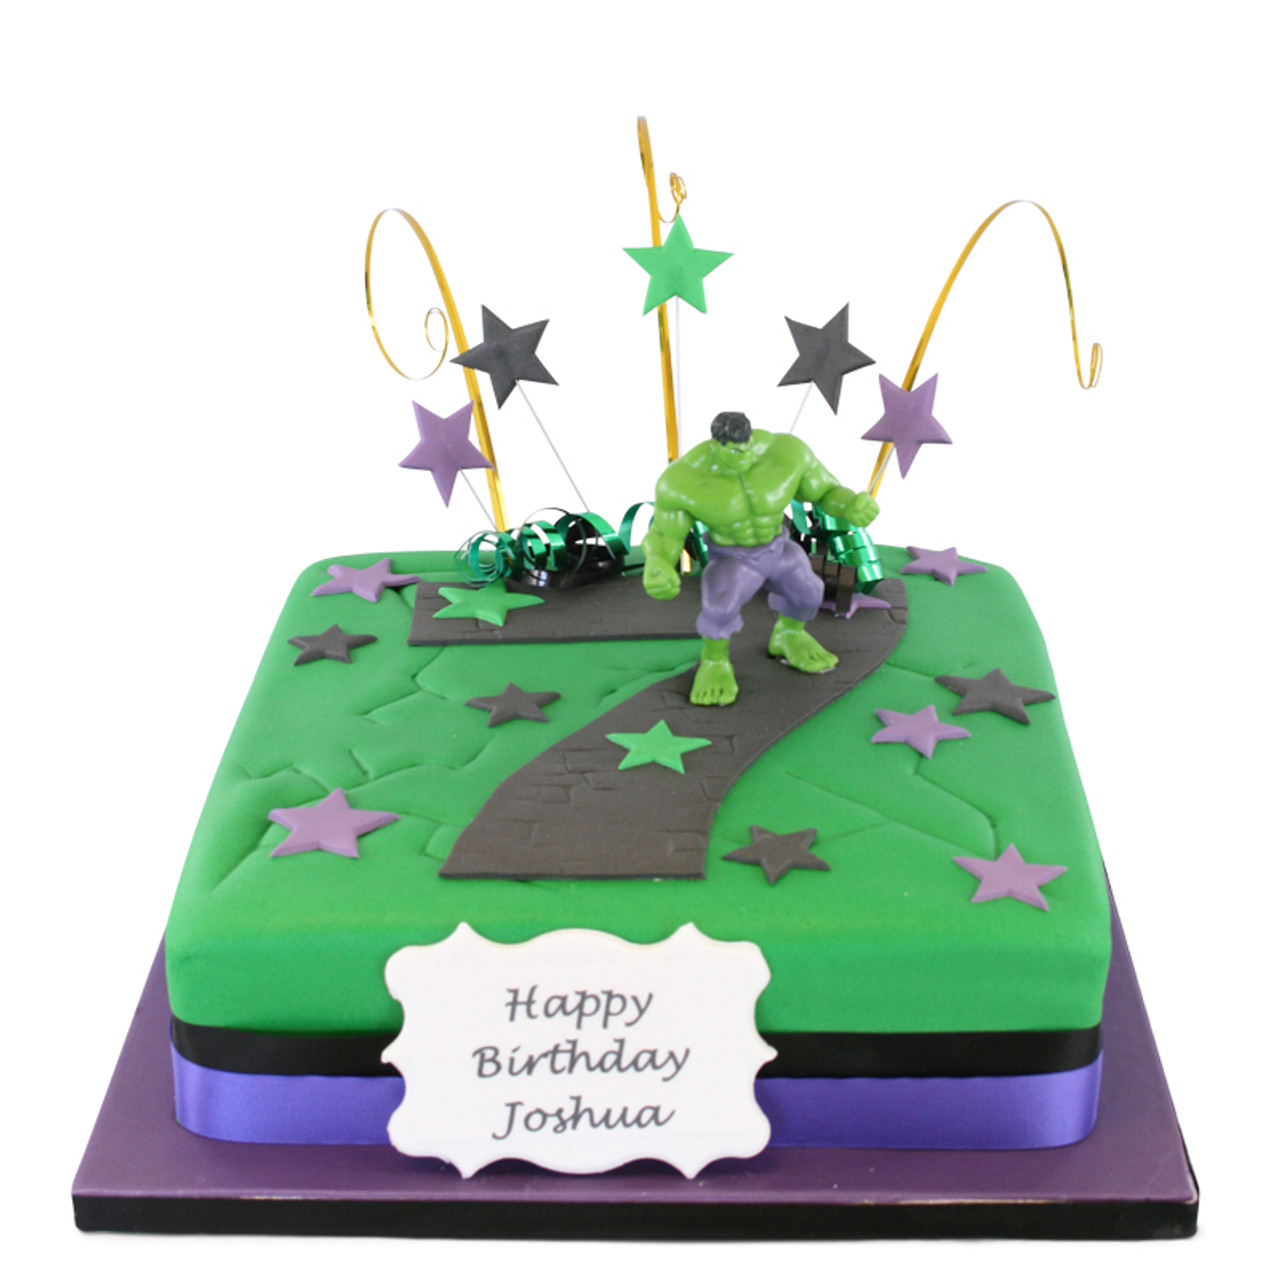 HULK CAKE DESIGN - Bliss cake house klang | Facebook